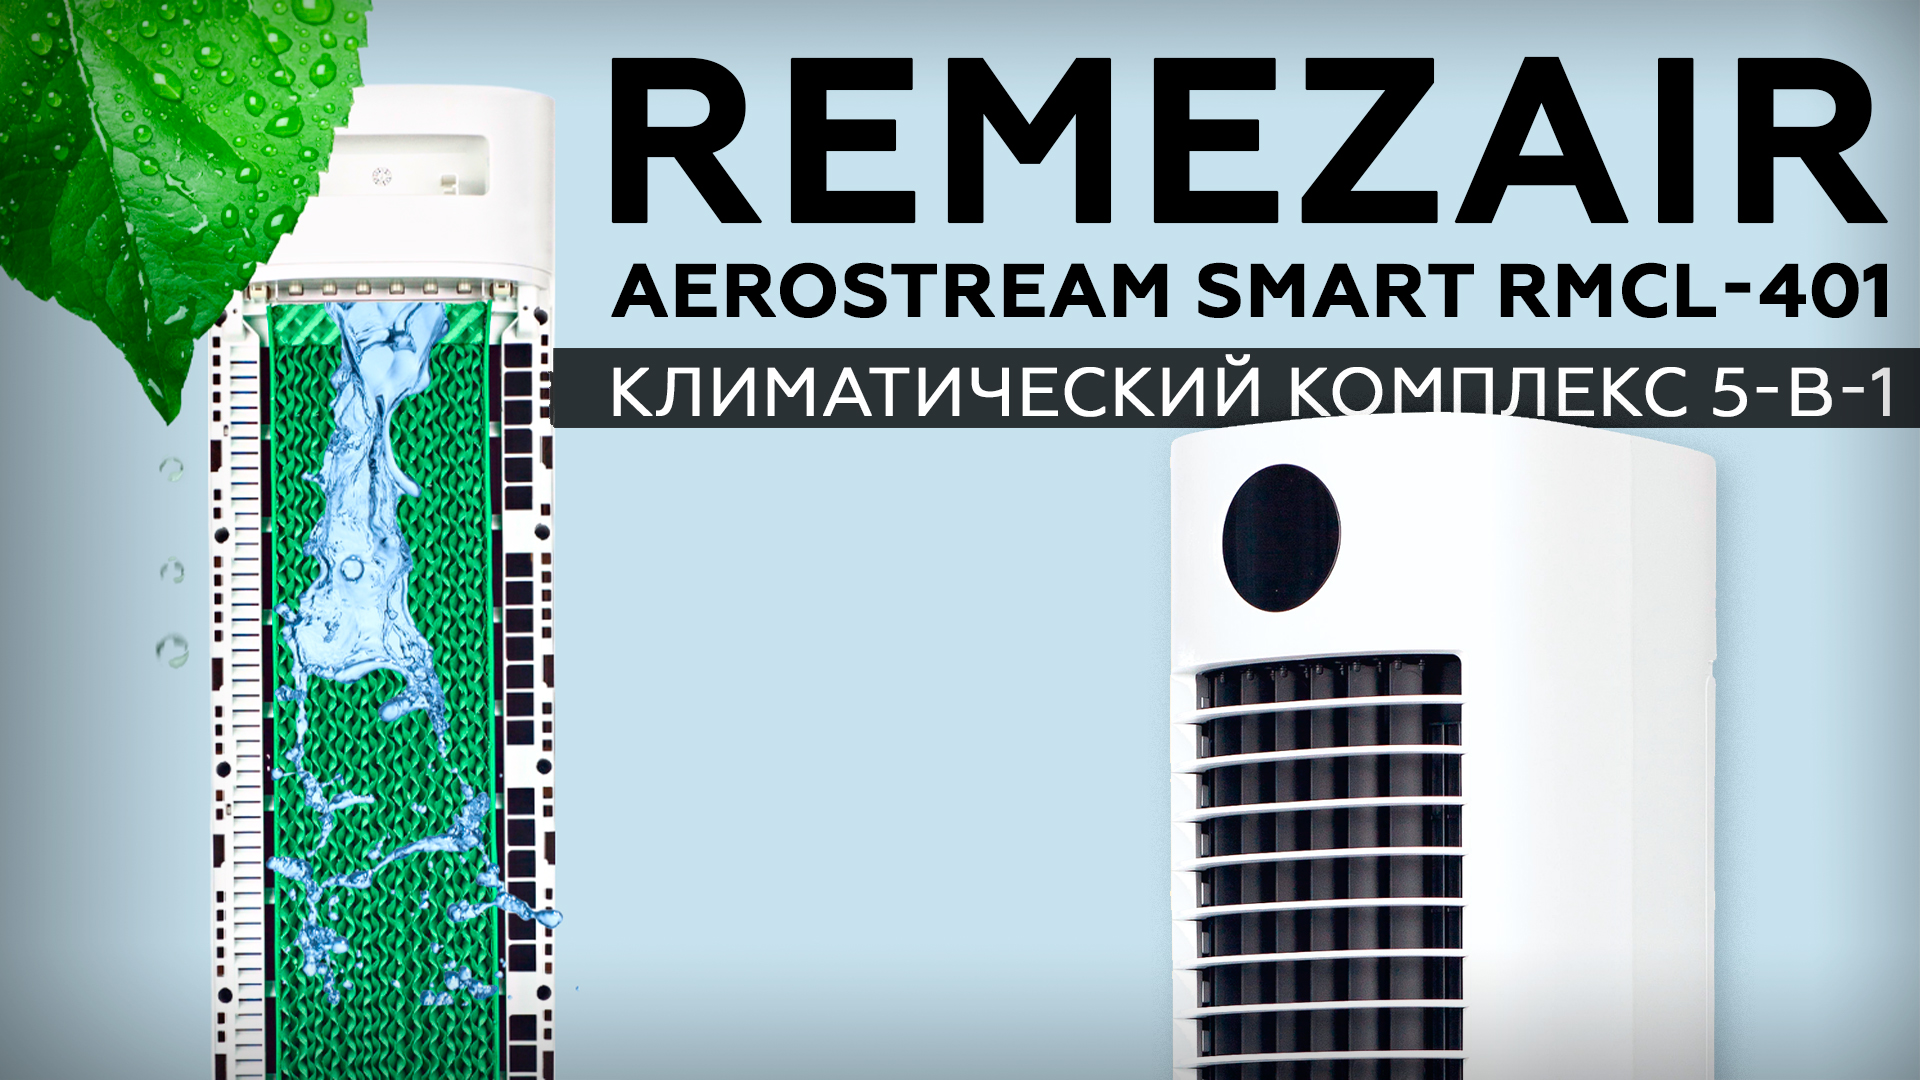 Обзор климатического комплекса RemezAir AeroStream Smart RMCL-401